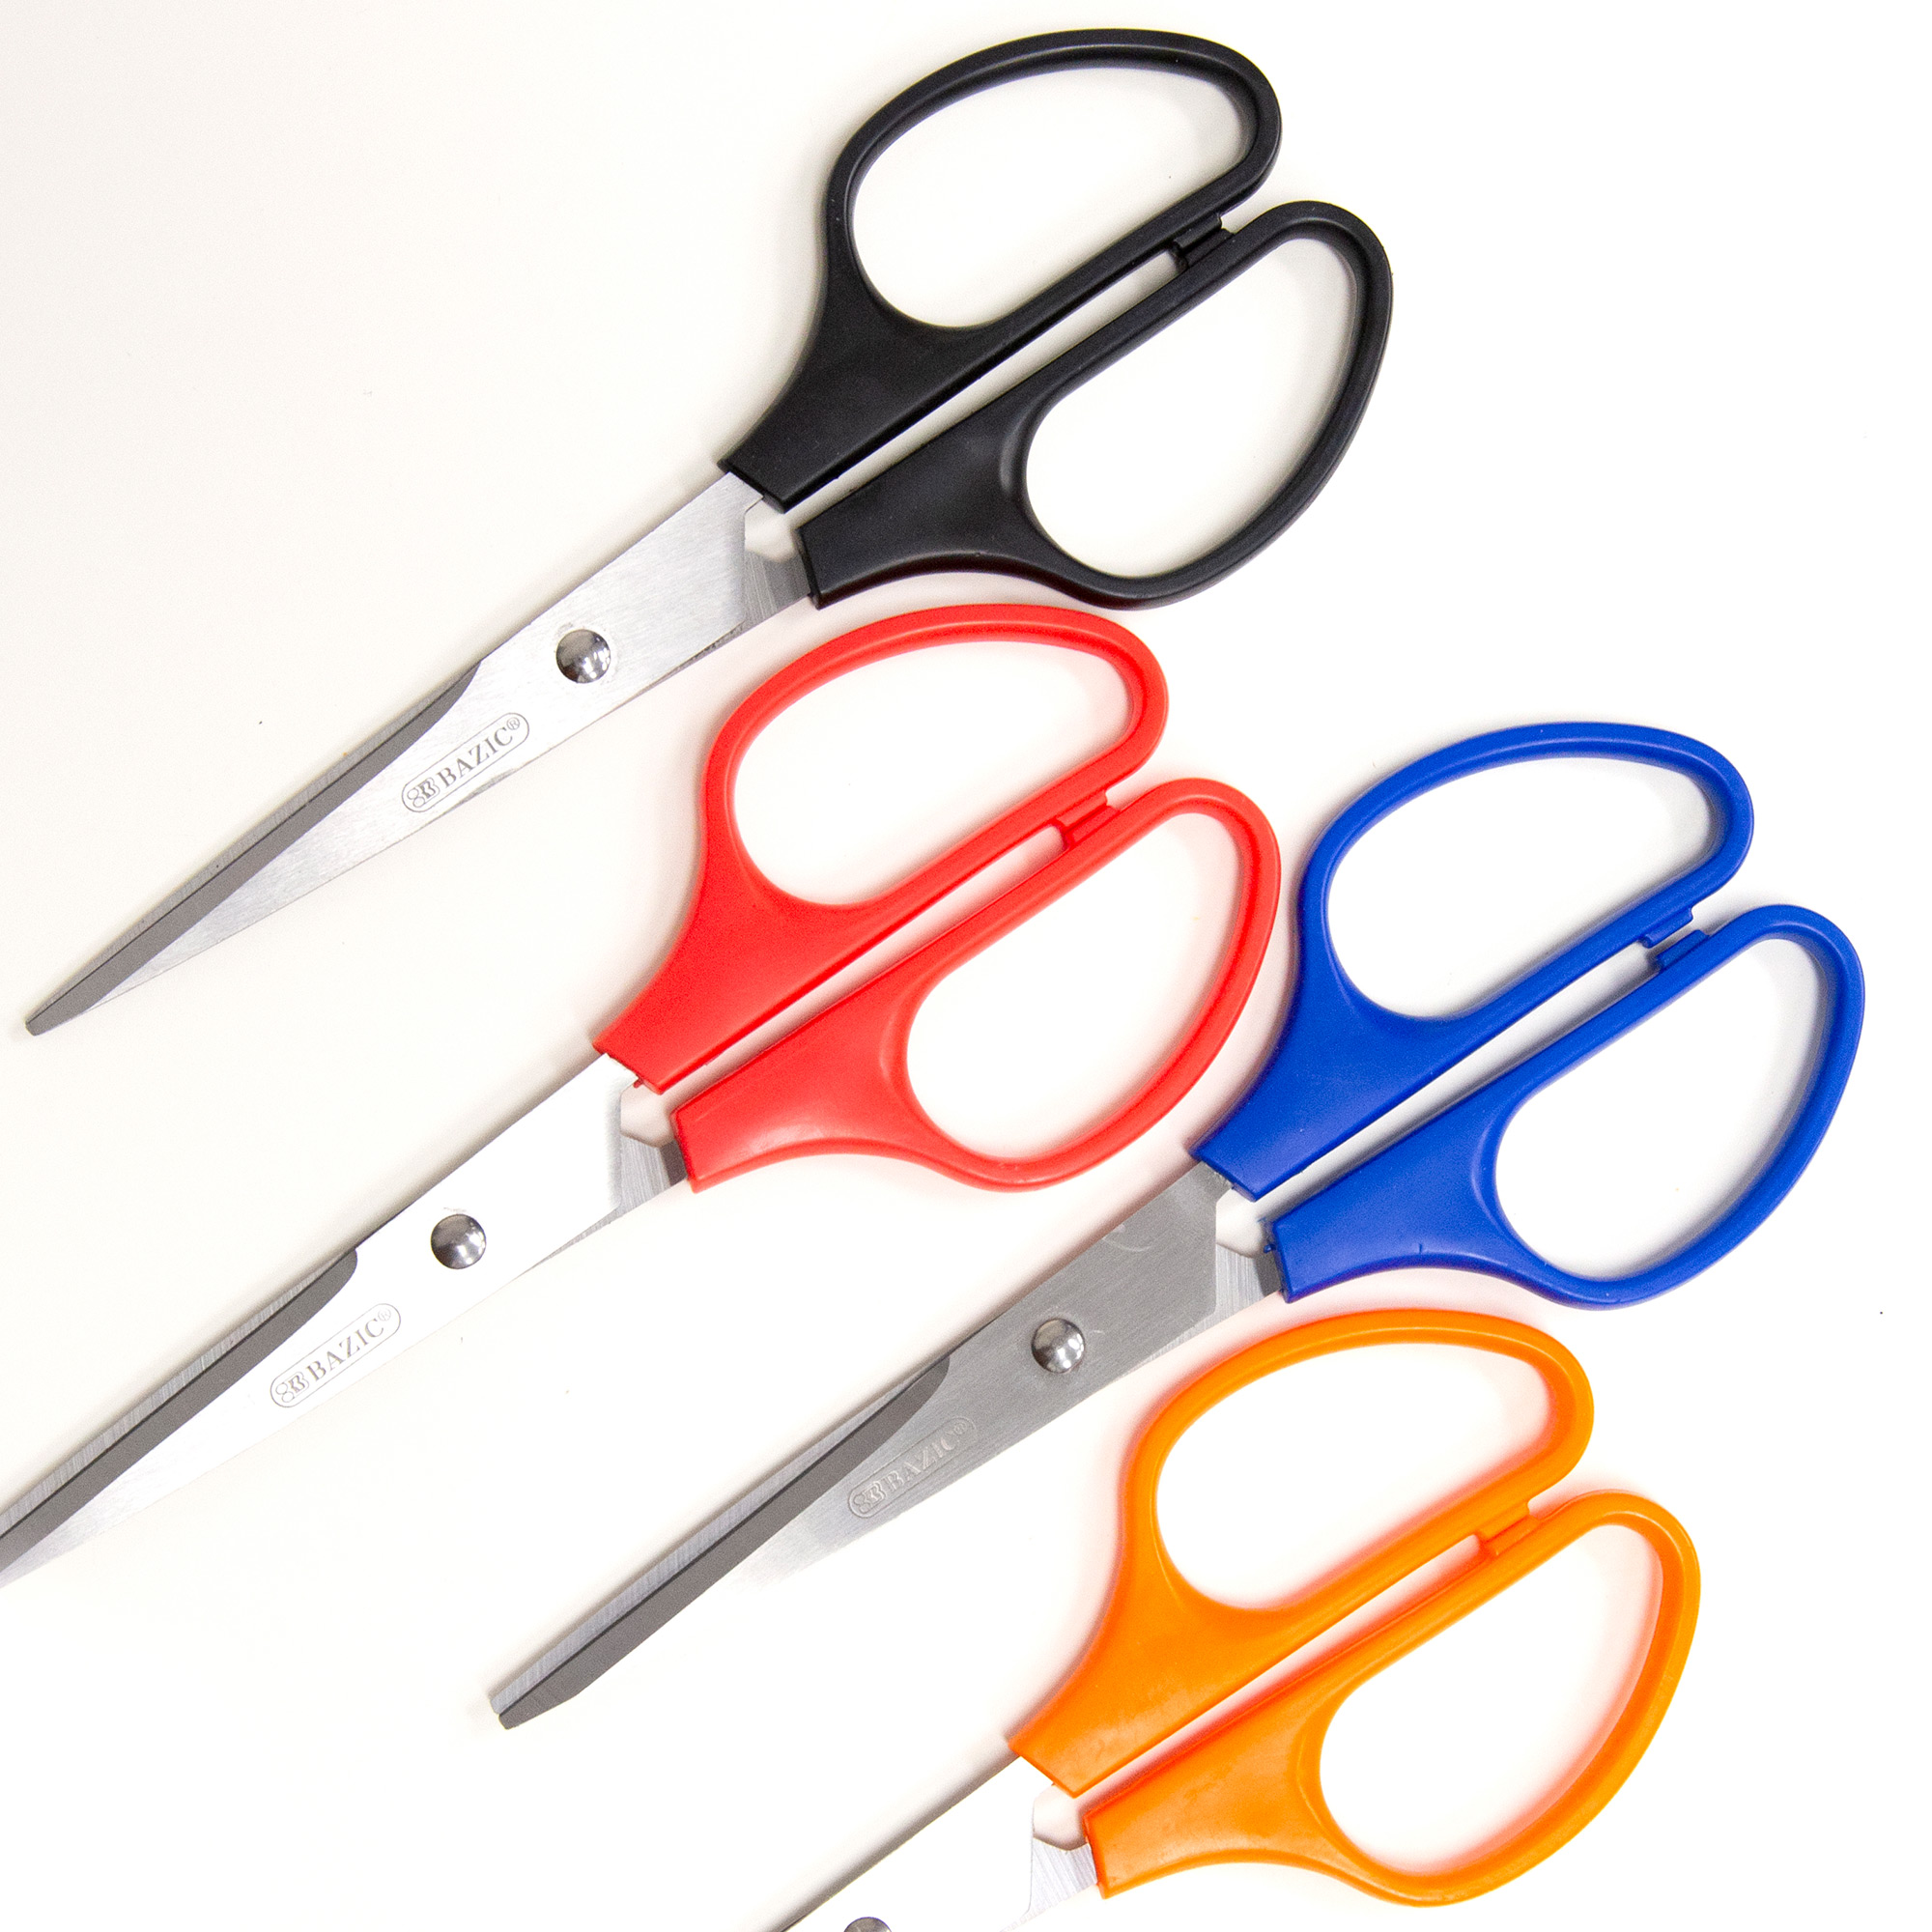 Bazic 8 Bent Handle Stainless Steel Scissors